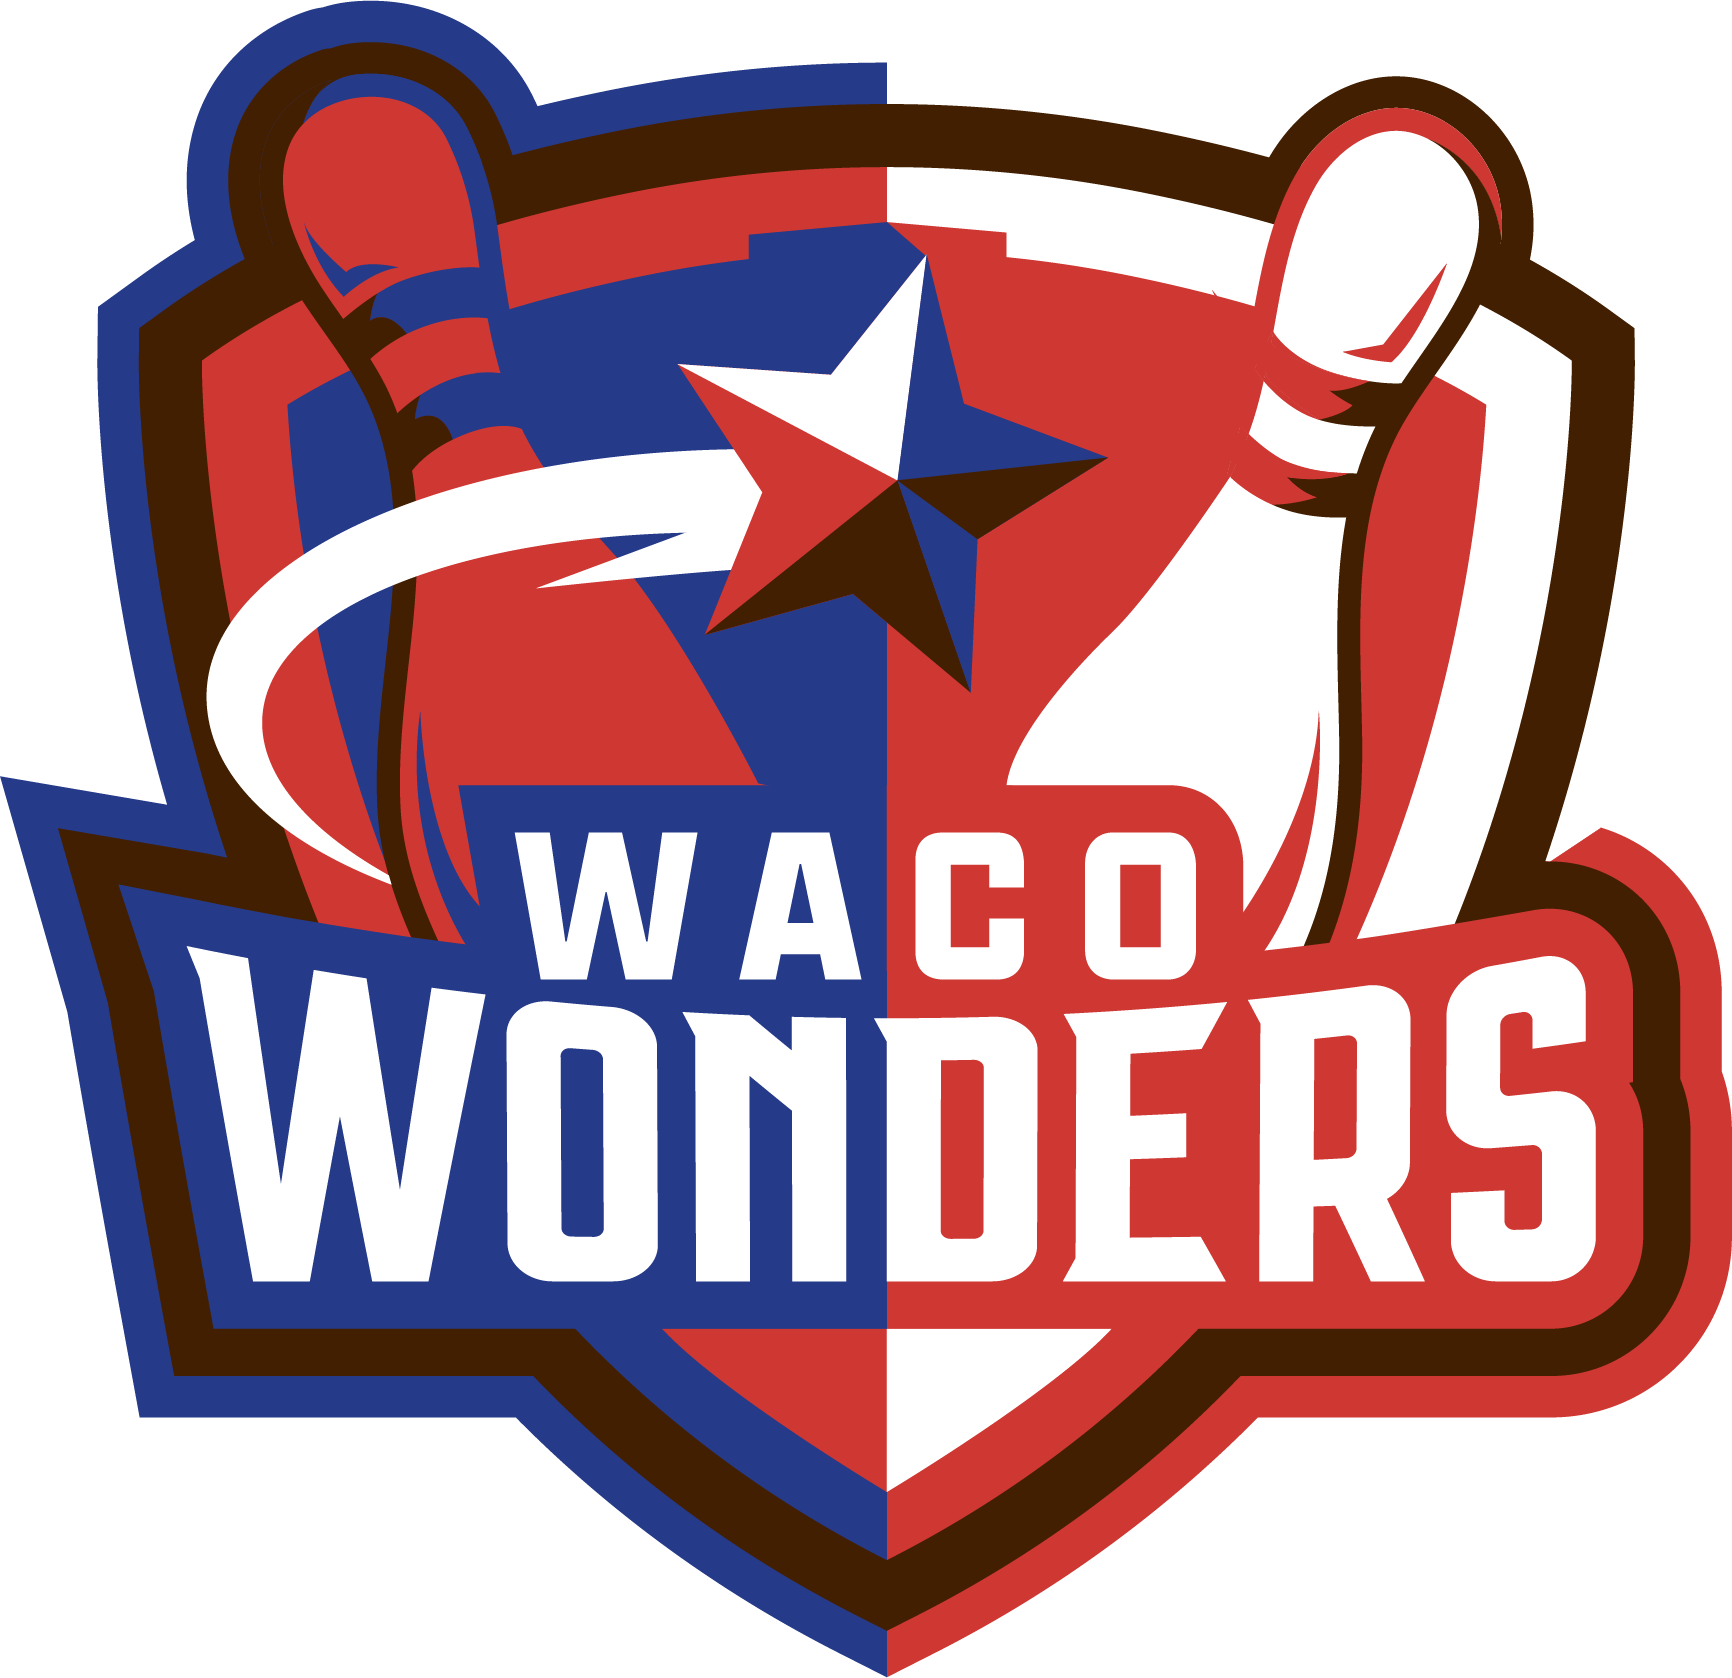 Waco Wonders Logo